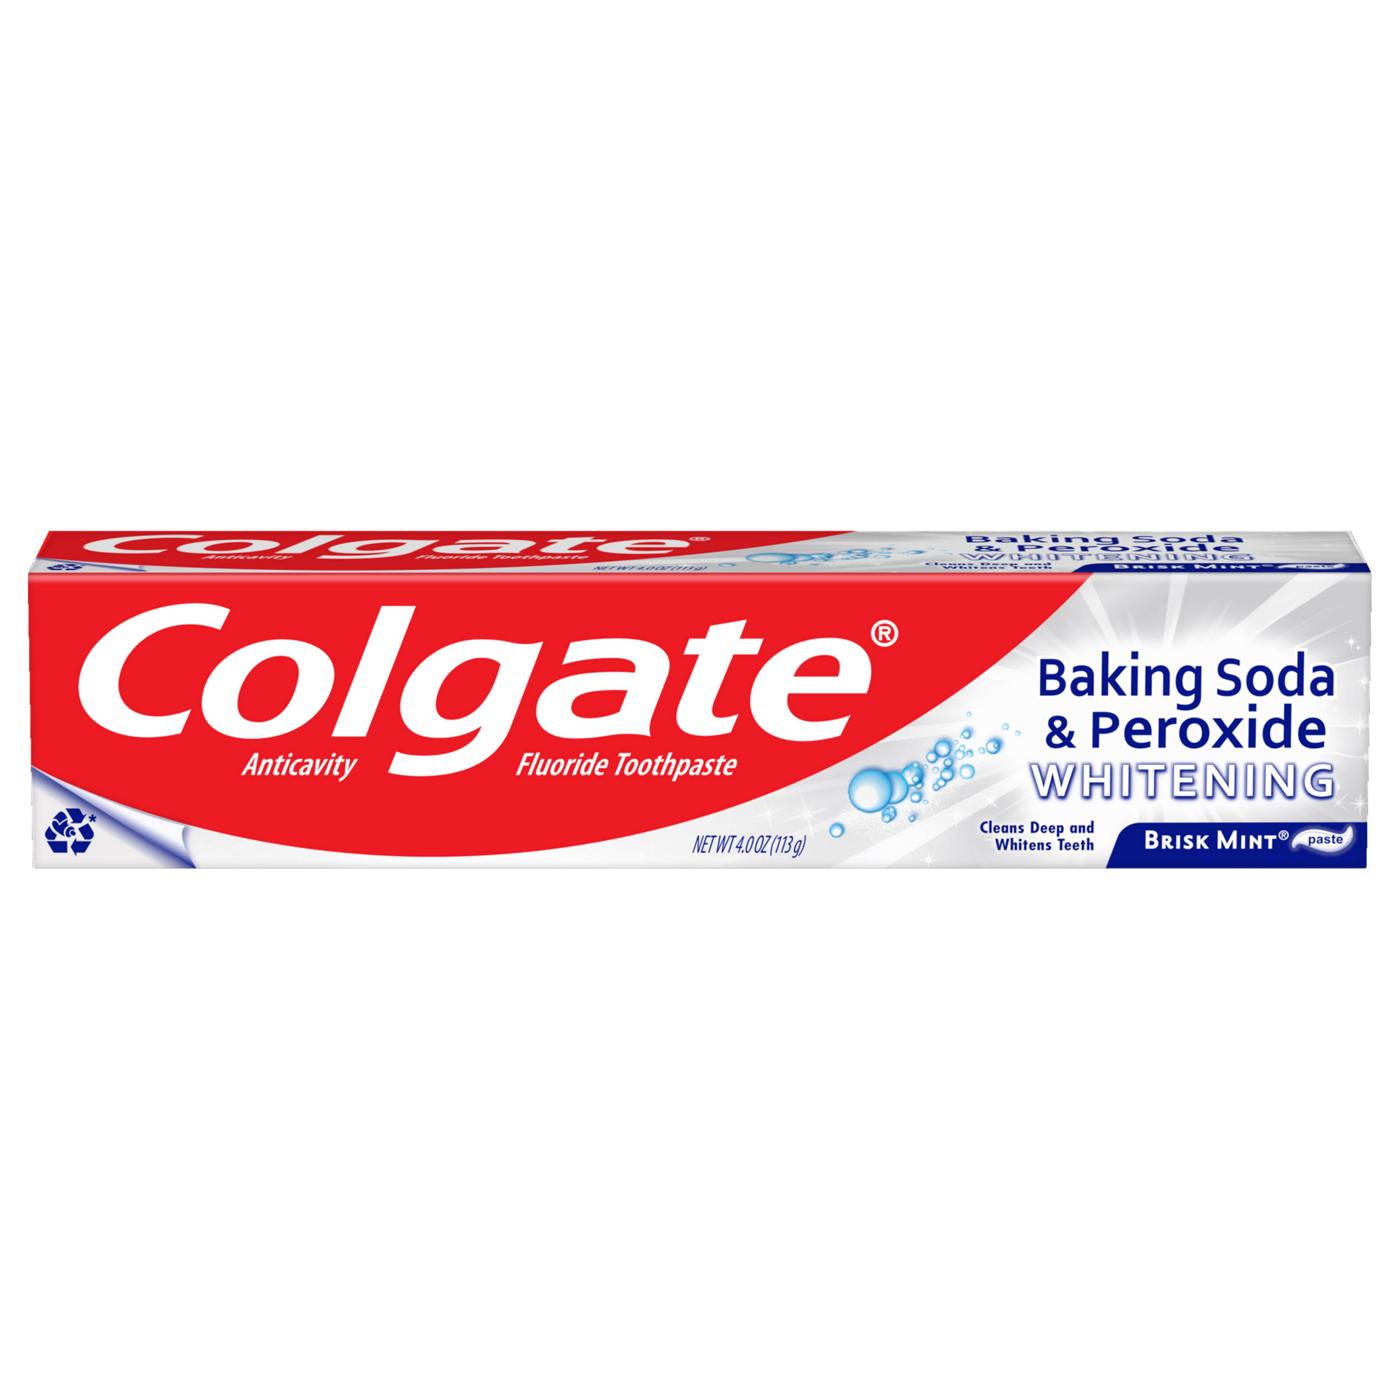 Colgate Baking Soda & Peroxide Whitening Anticavity Toothpaste - Brisk Mint; image 1 of 3